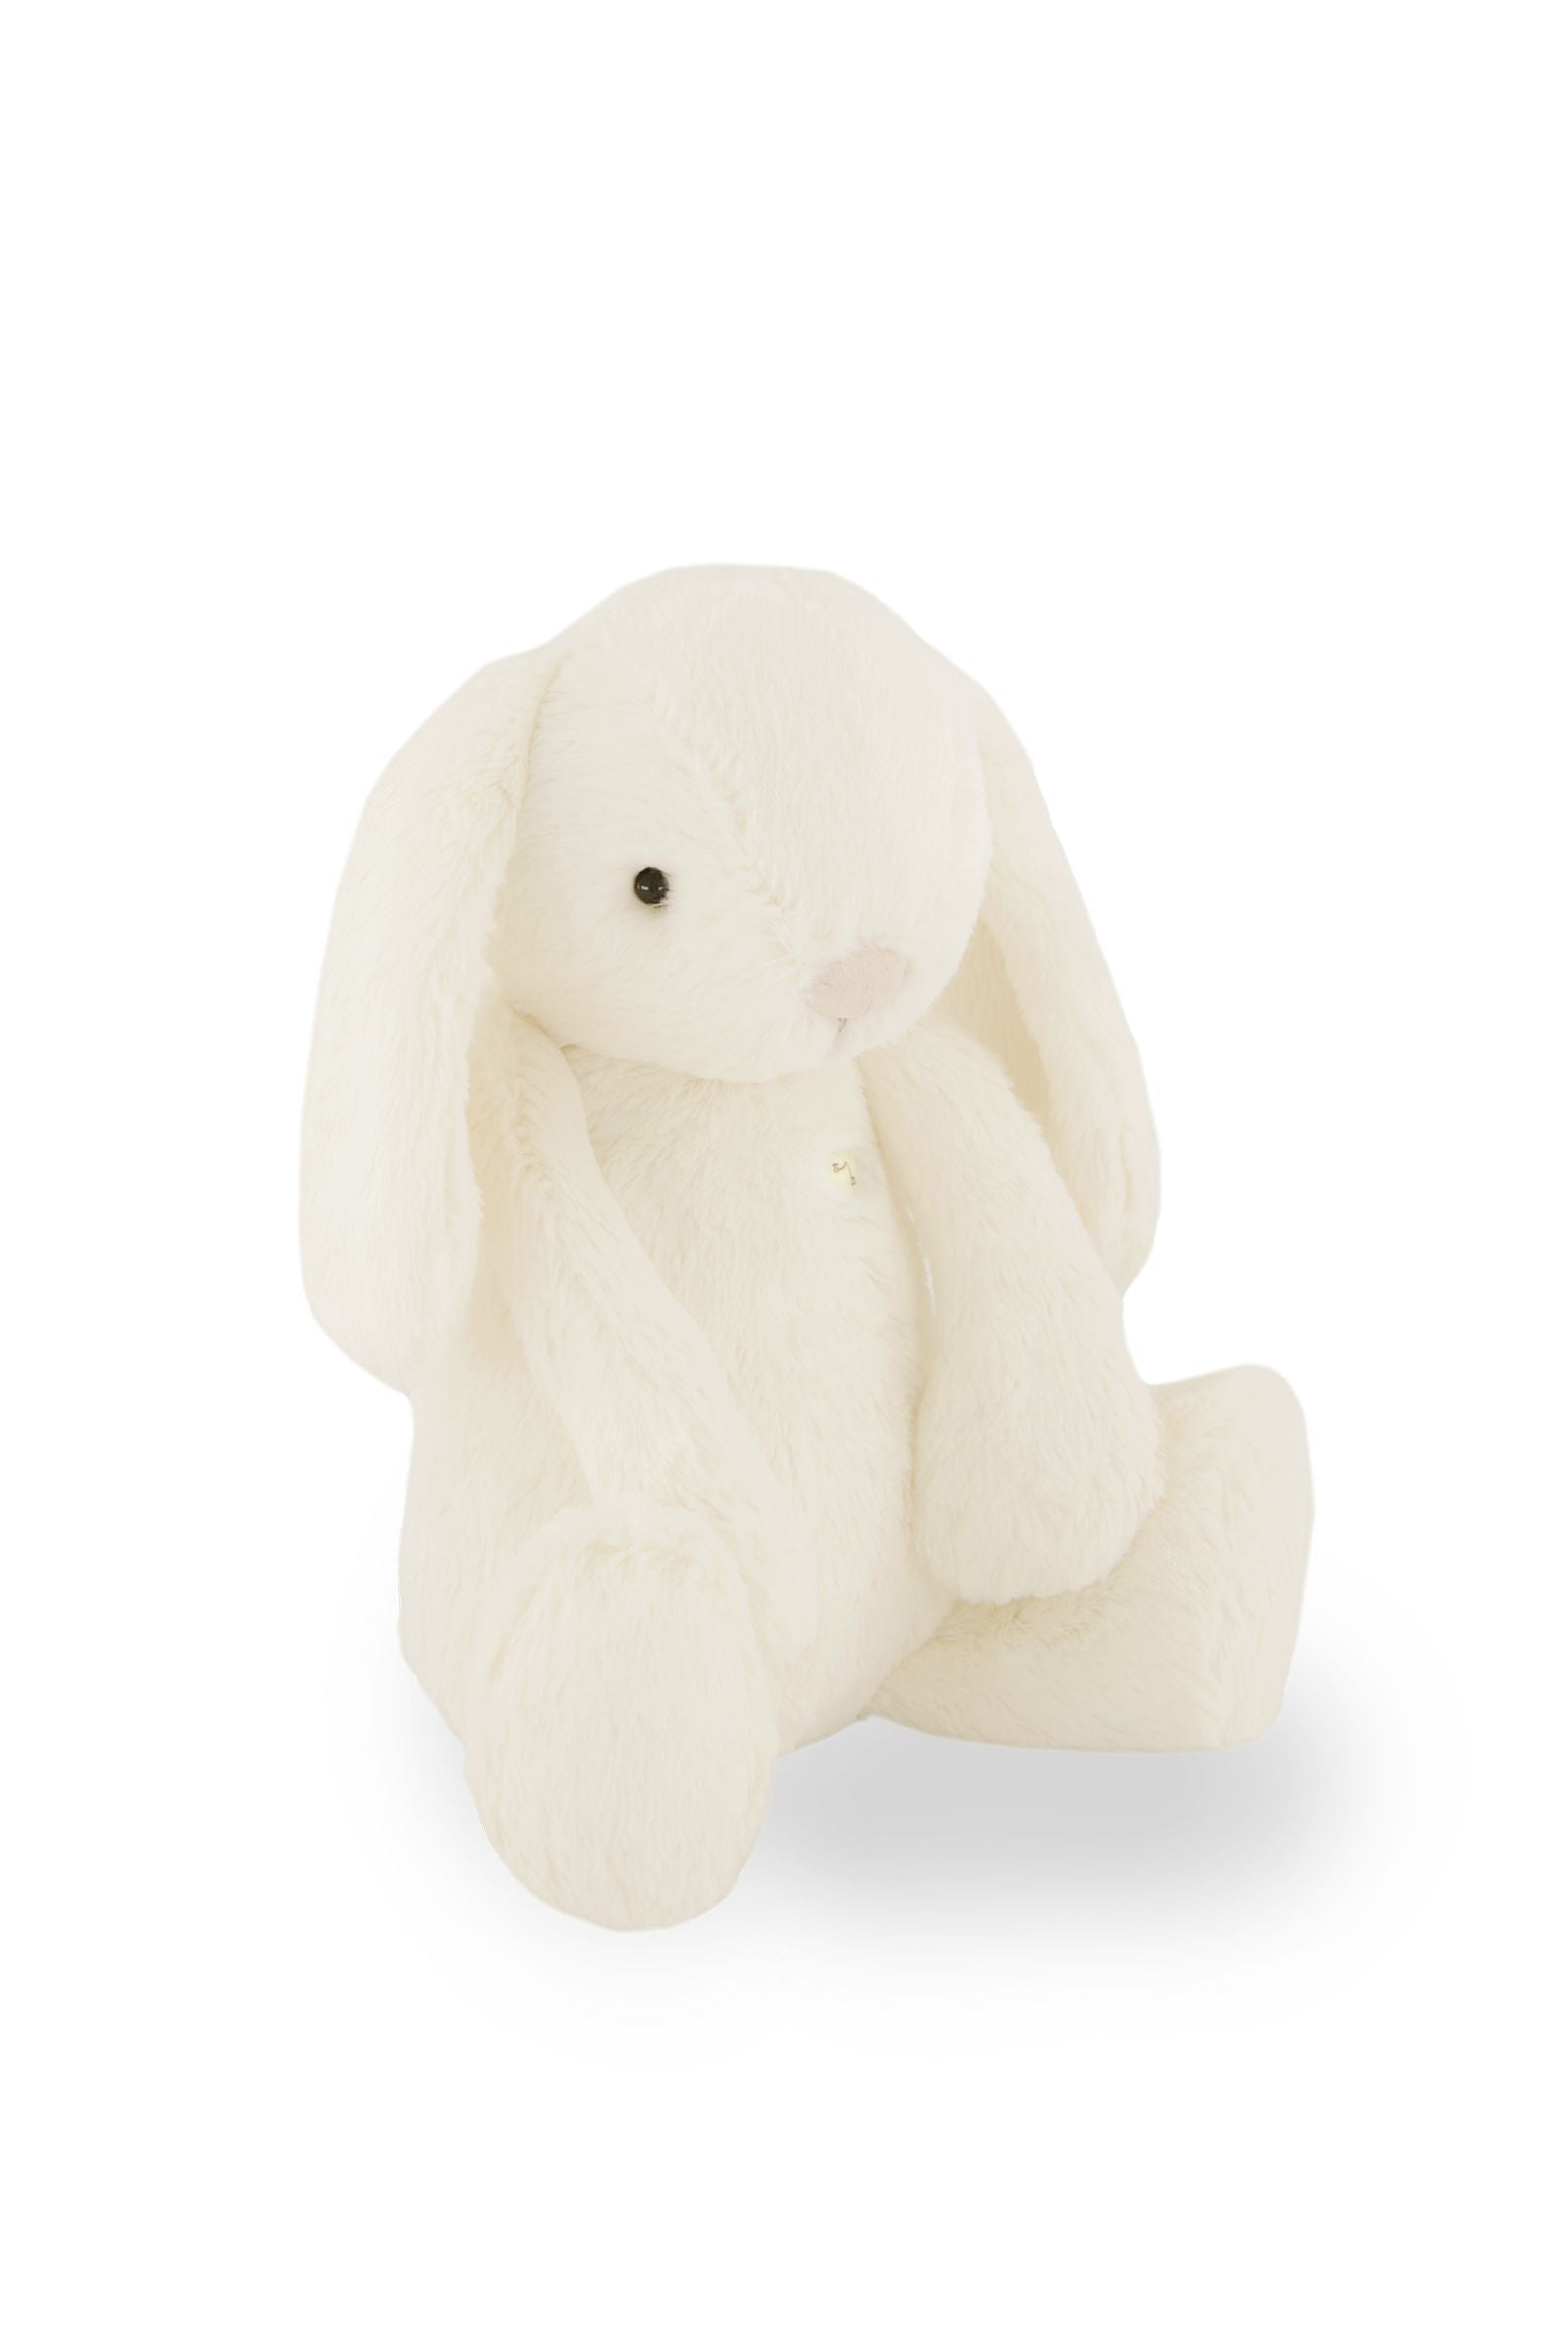 Snuggle Bunnies - Penelope the Bunny - Marshmallow 30cm-Toys-Jamie Kay-The Bay Room